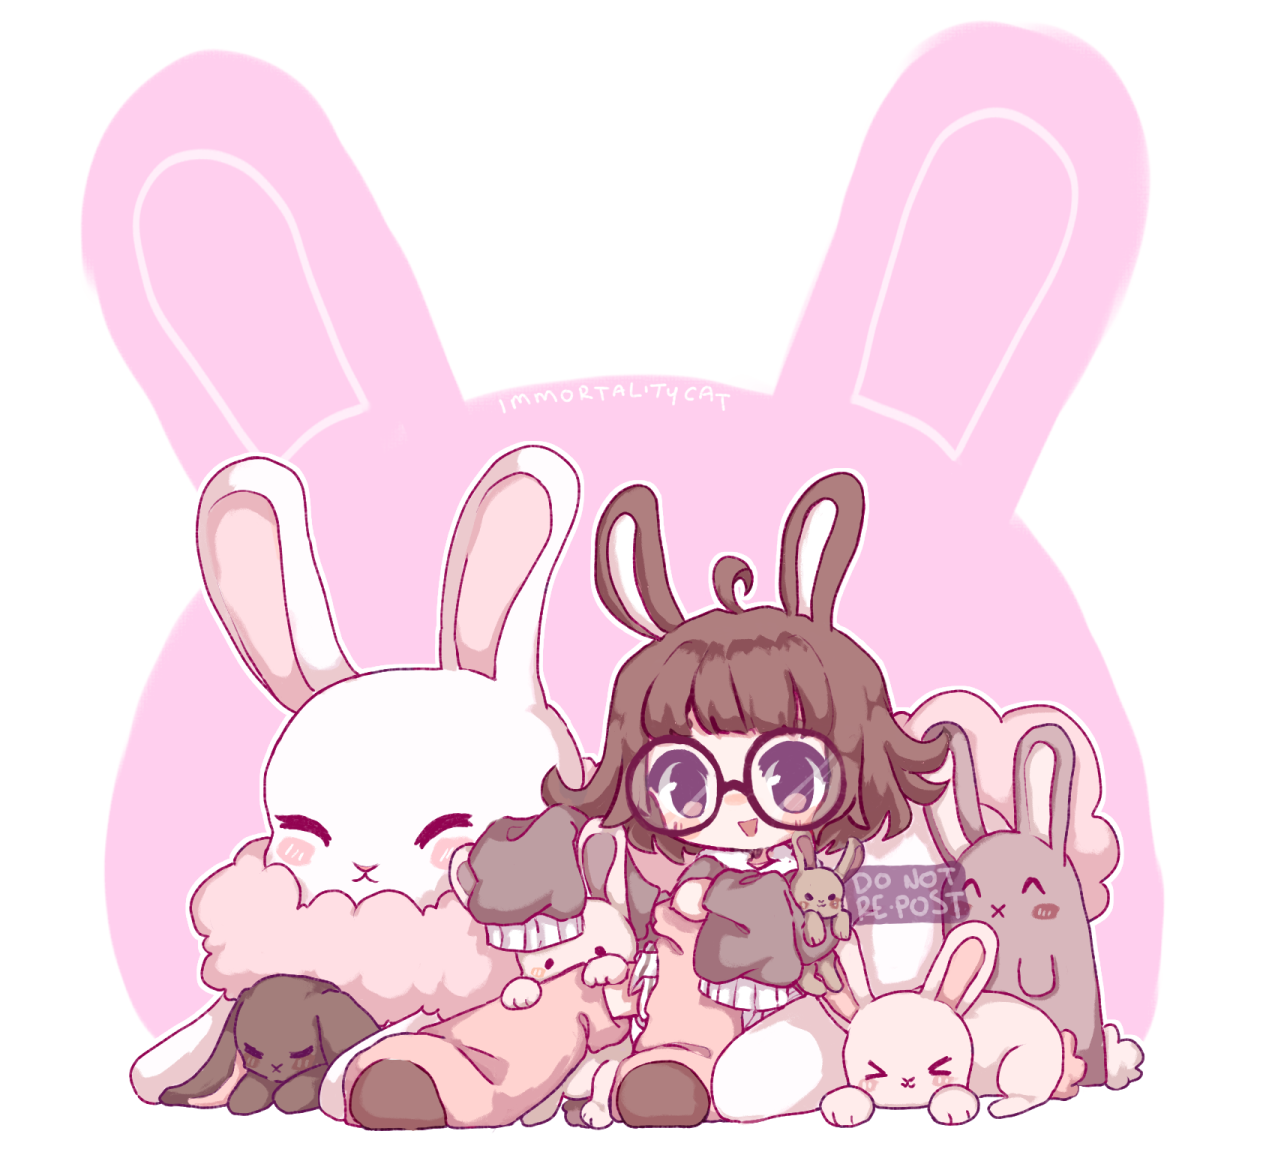 pink bunnies